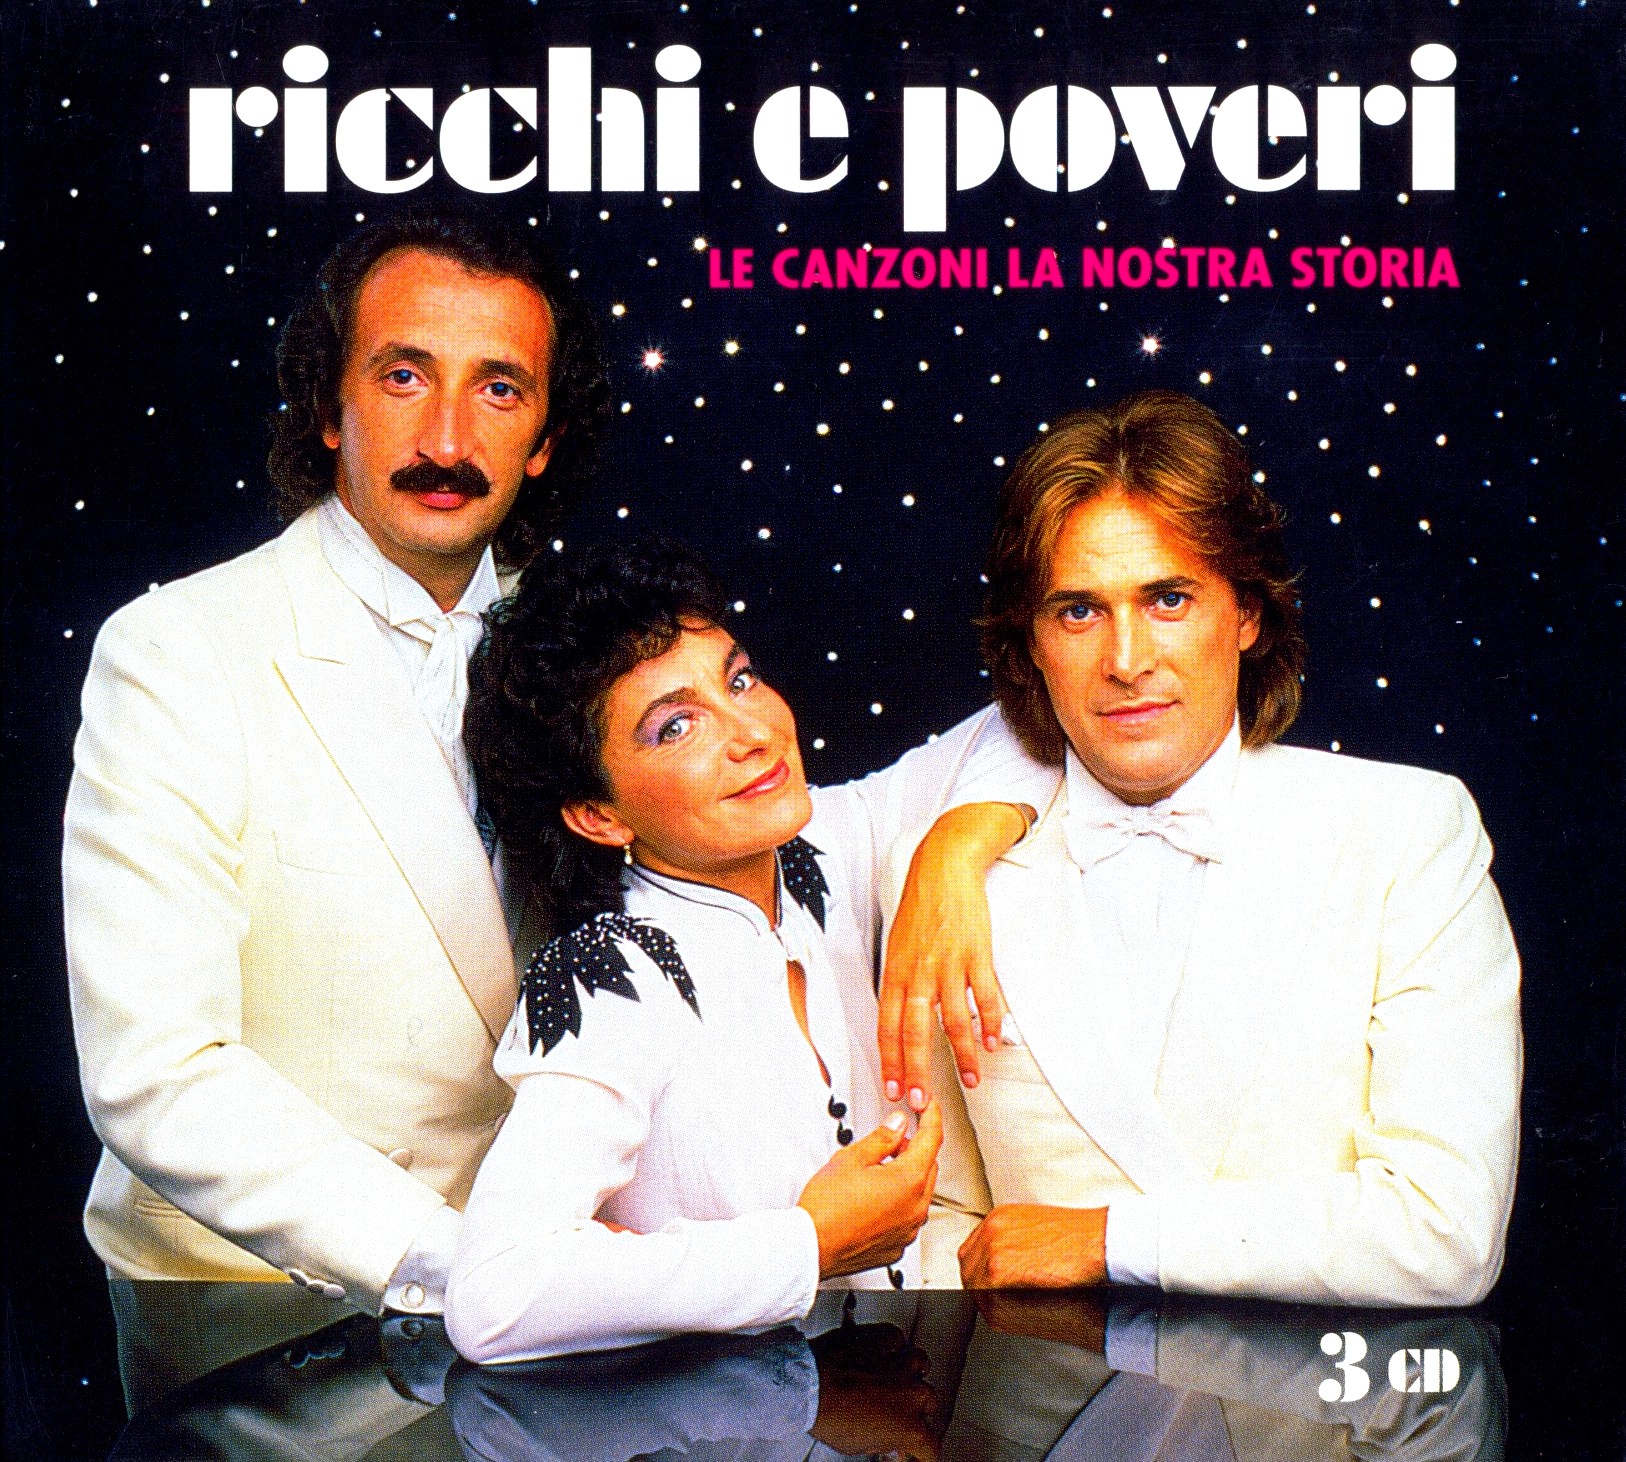 Итальянская музыка 80 х 90 х слушать. Группа Ricchi e Poveri. Группа Ricchi e Poveri сейчас. Группа Рики и повери. Итальянская группа Рикки и повери.